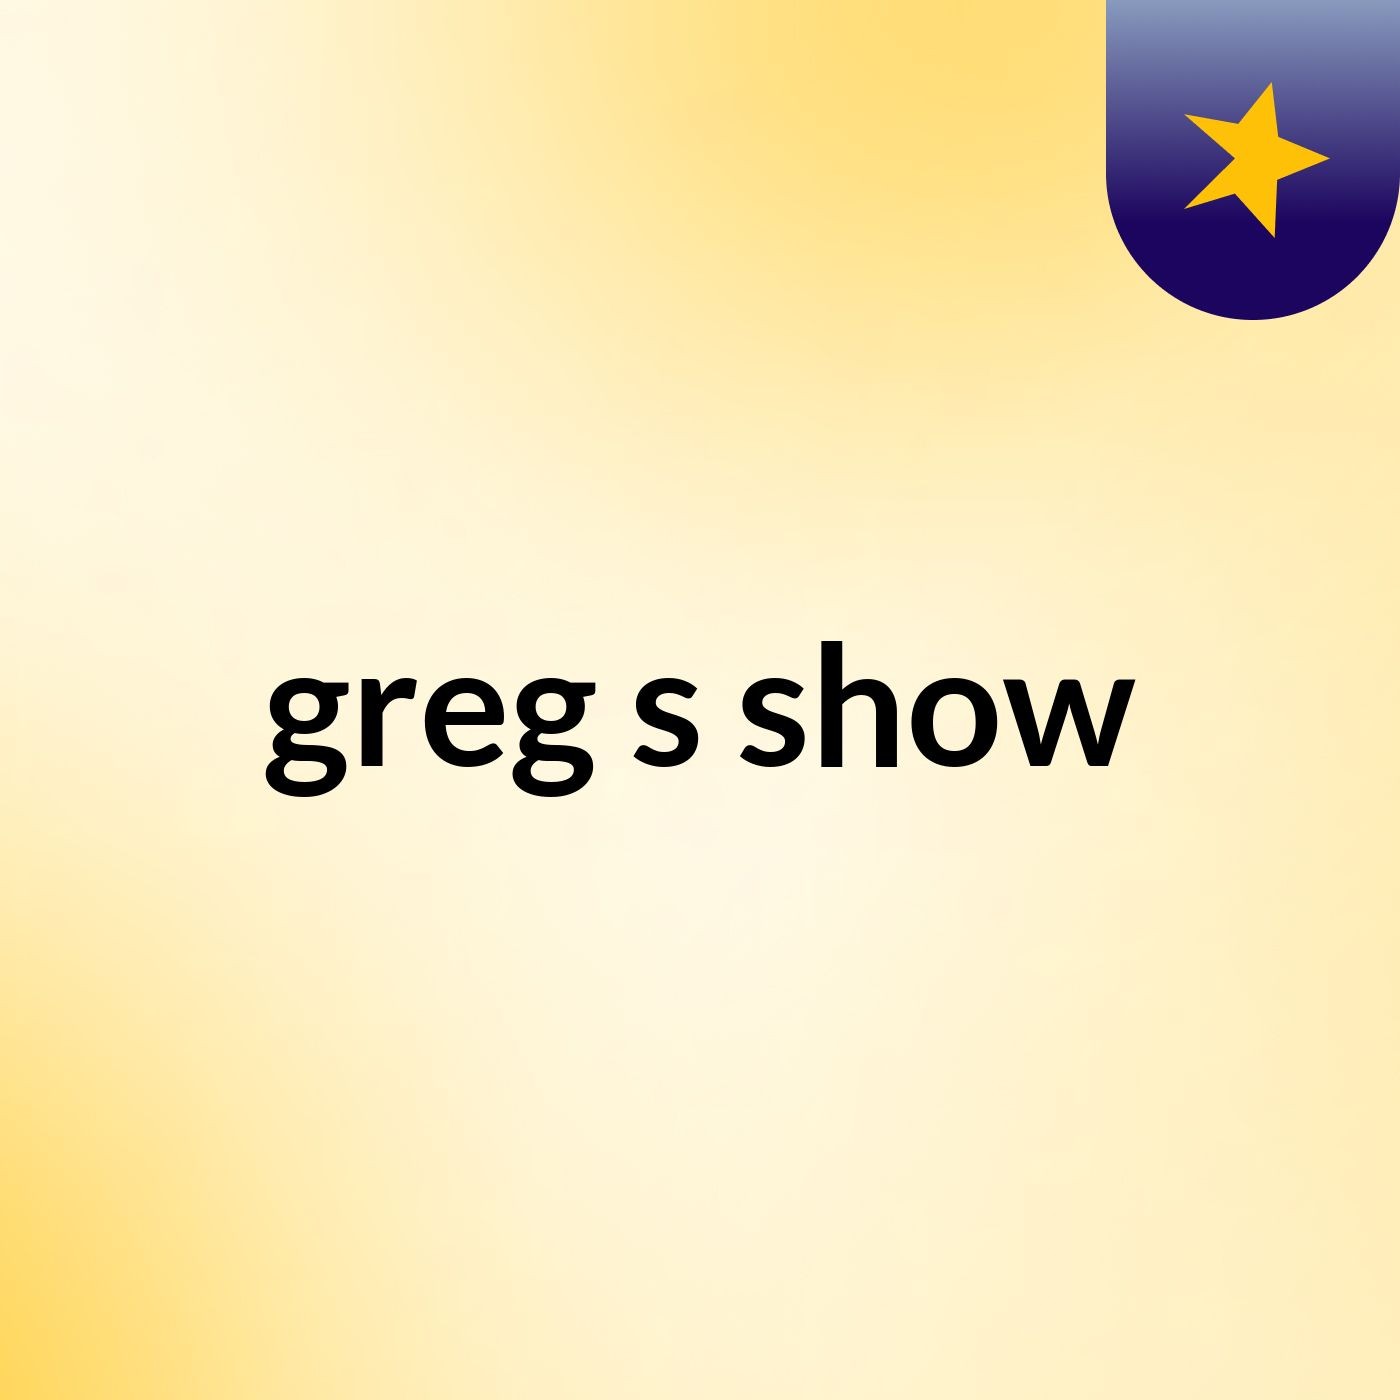 greg's show